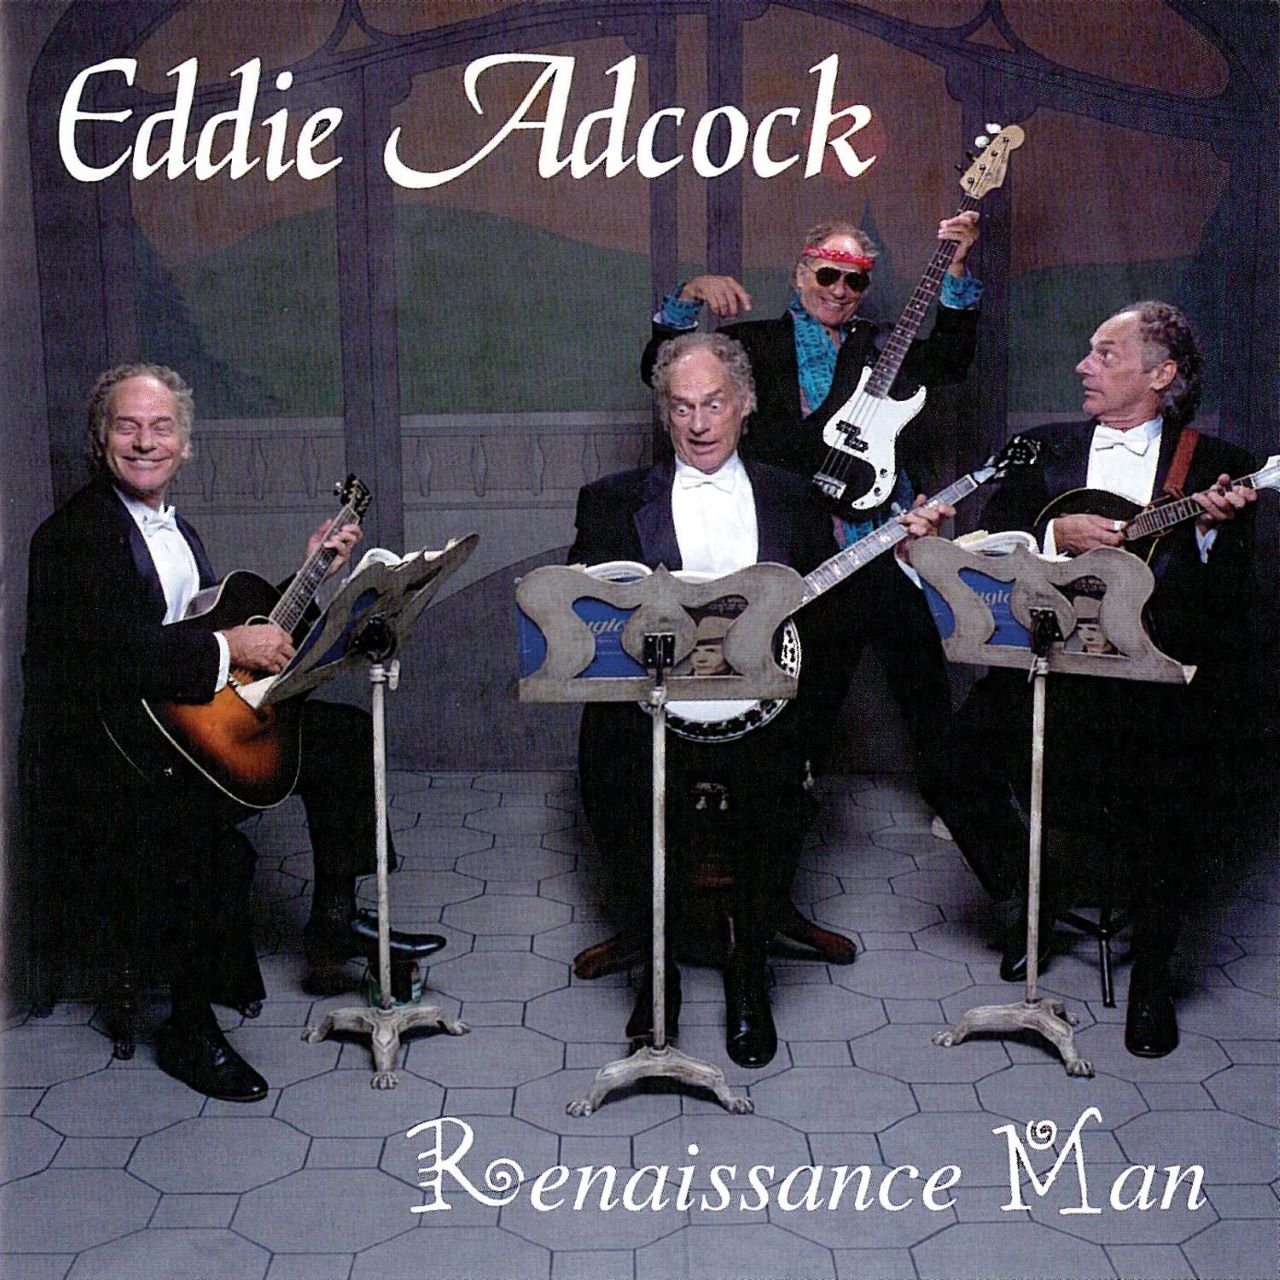 Eddie Adcock - Renaissance Man covewr album